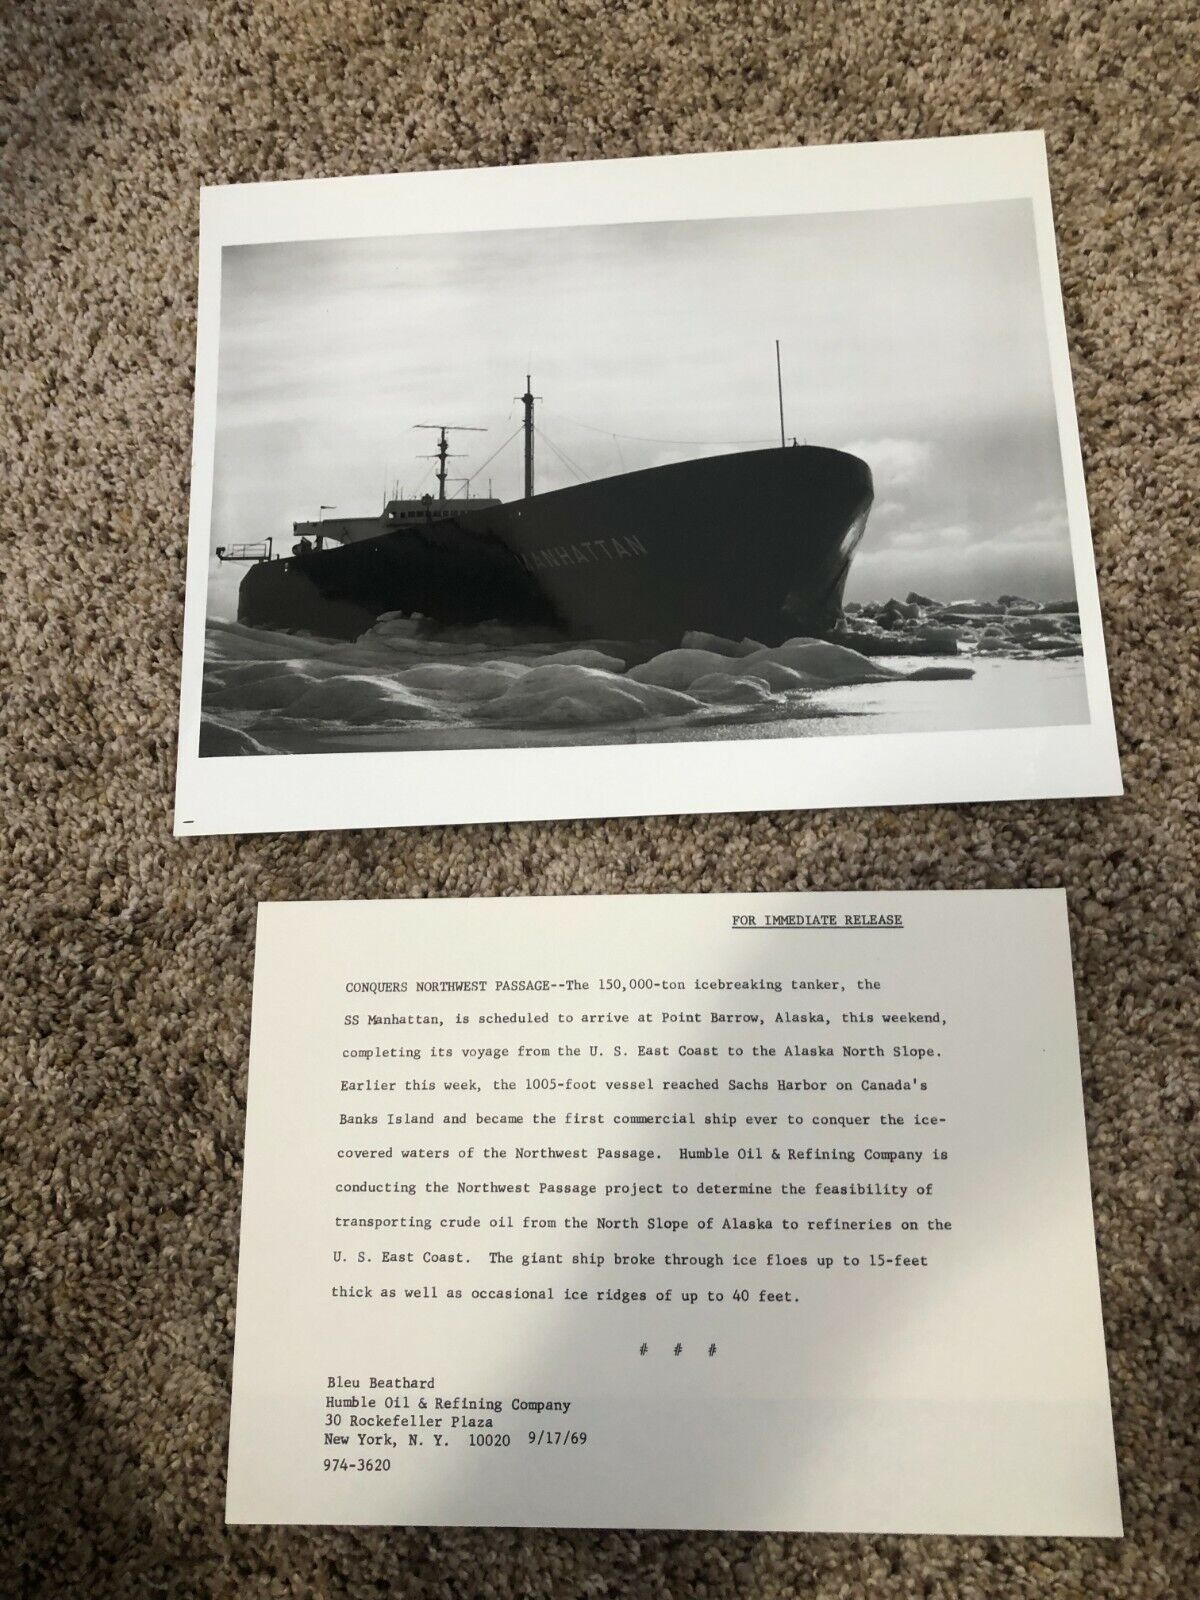 1969 Press Photo & Release Document - Humble Oil (Exxon) SS Manhattan NW Passage